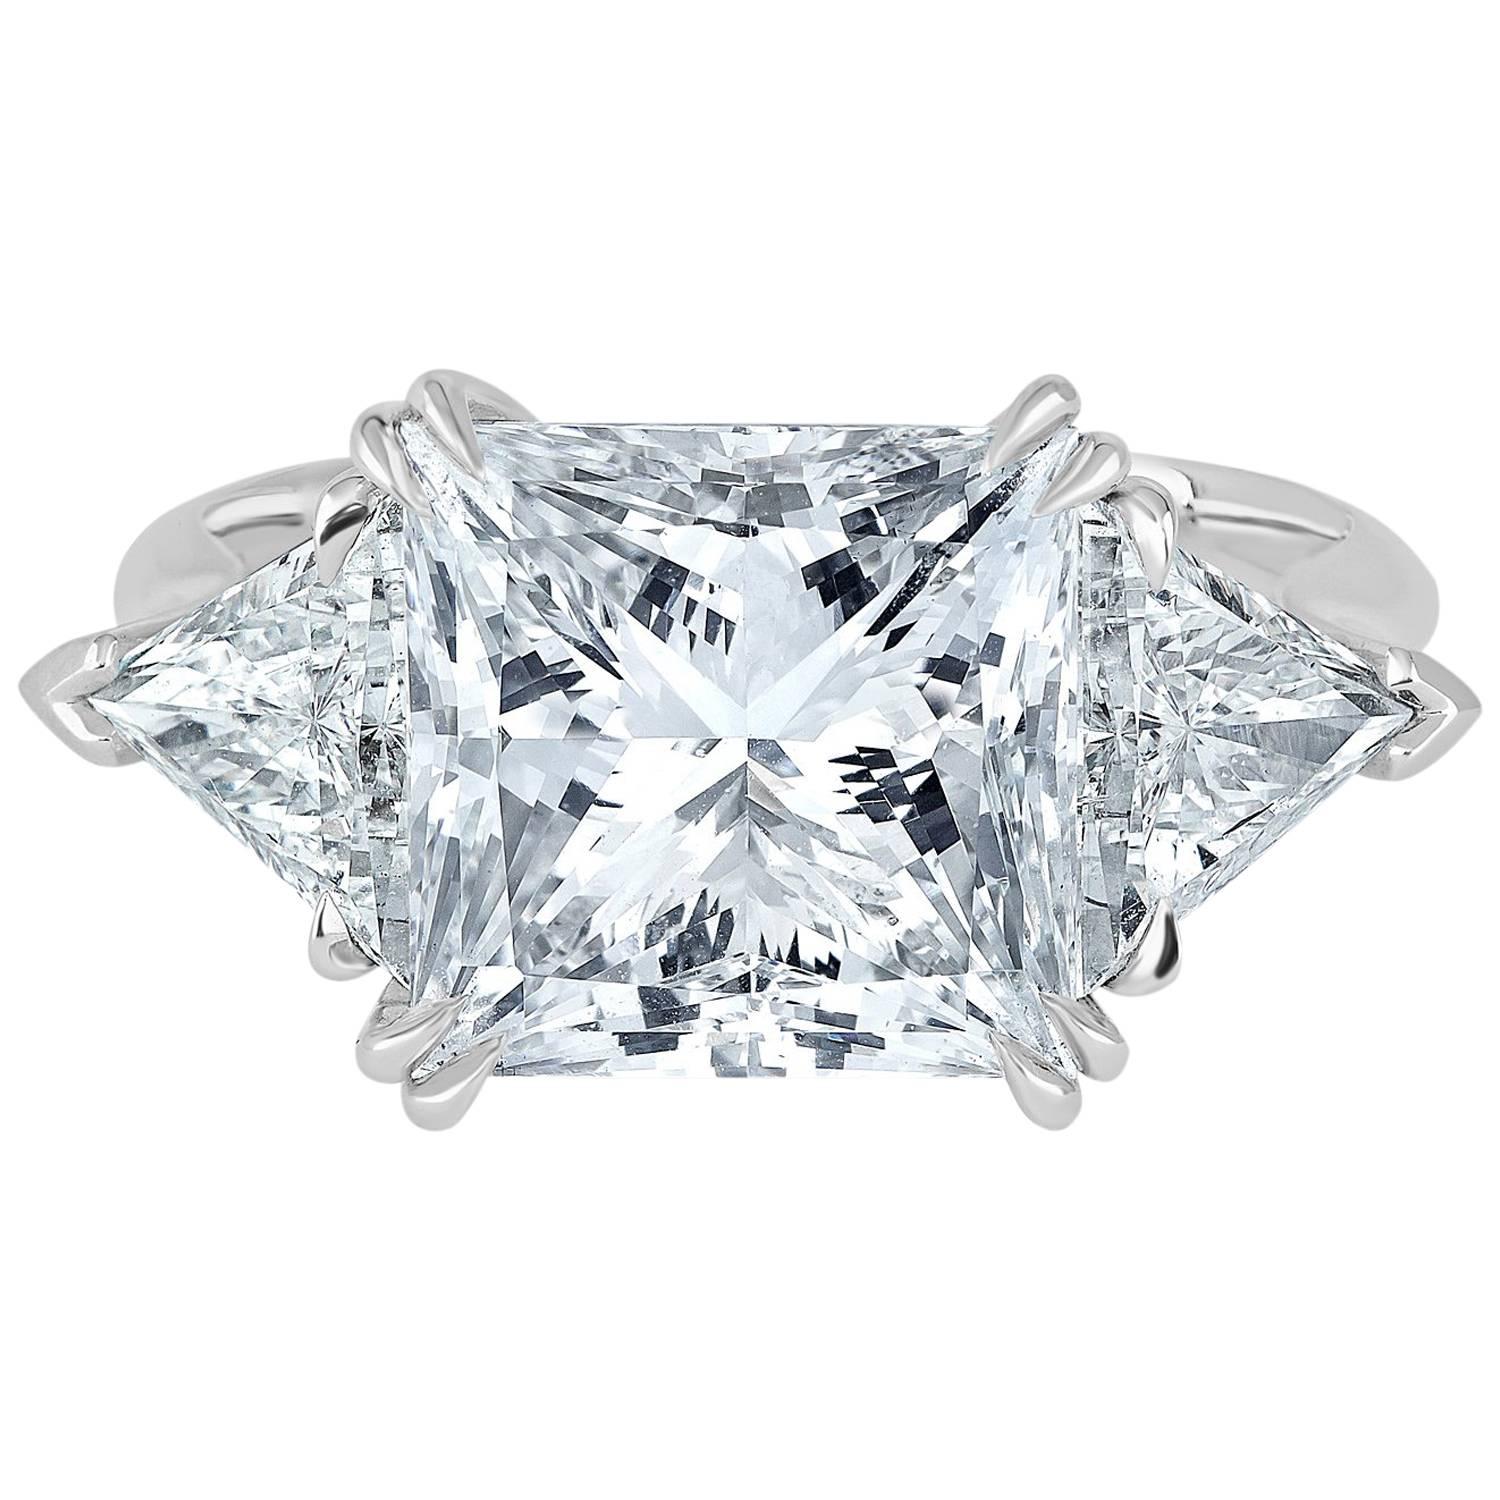 Platinum Ring, Set with Princess Cut Diamond, Weigh 5.02 Carat D Color SI1 For Sale